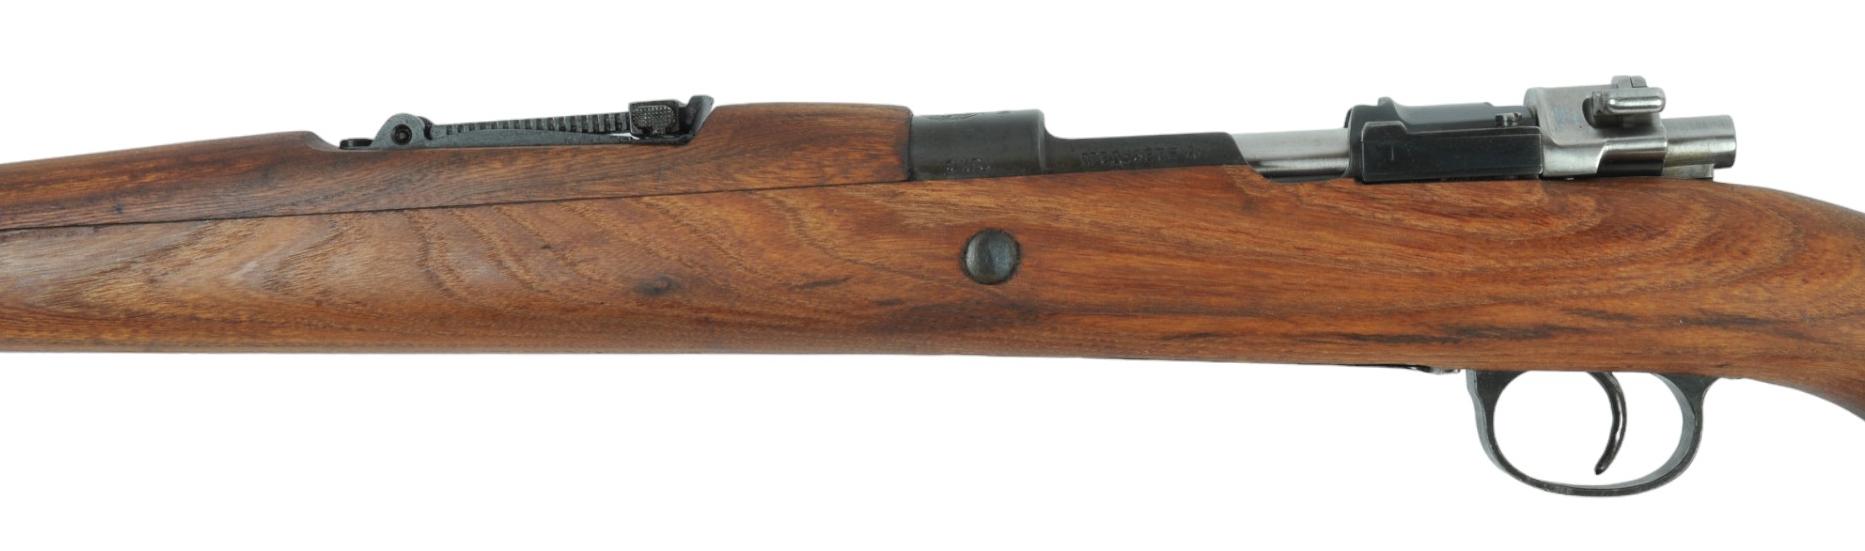 Mitchell's/Yugo M48 7.92x57MM Bolt-action Rifle FFL Required: A30223 (VDM1)